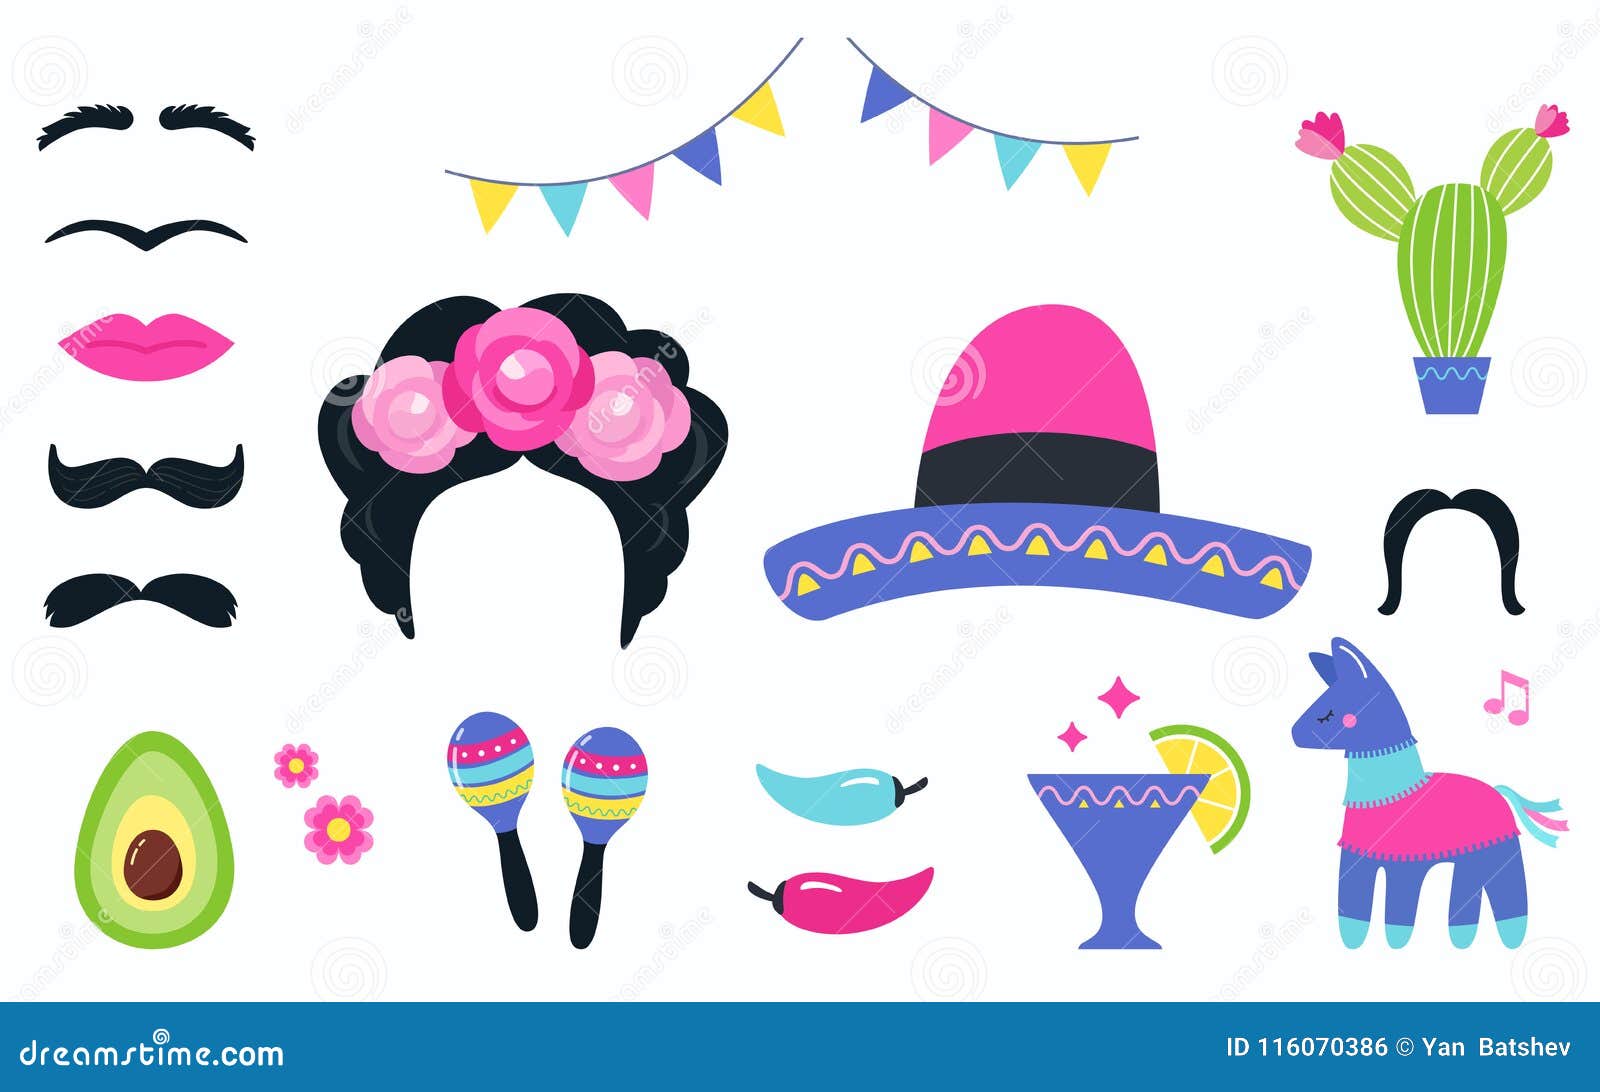 https://thumbs.dreamstime.com/z/mexican-fiesta-party-elements-photo-booth-props-set-vector-design-symbols-116070386.jpg